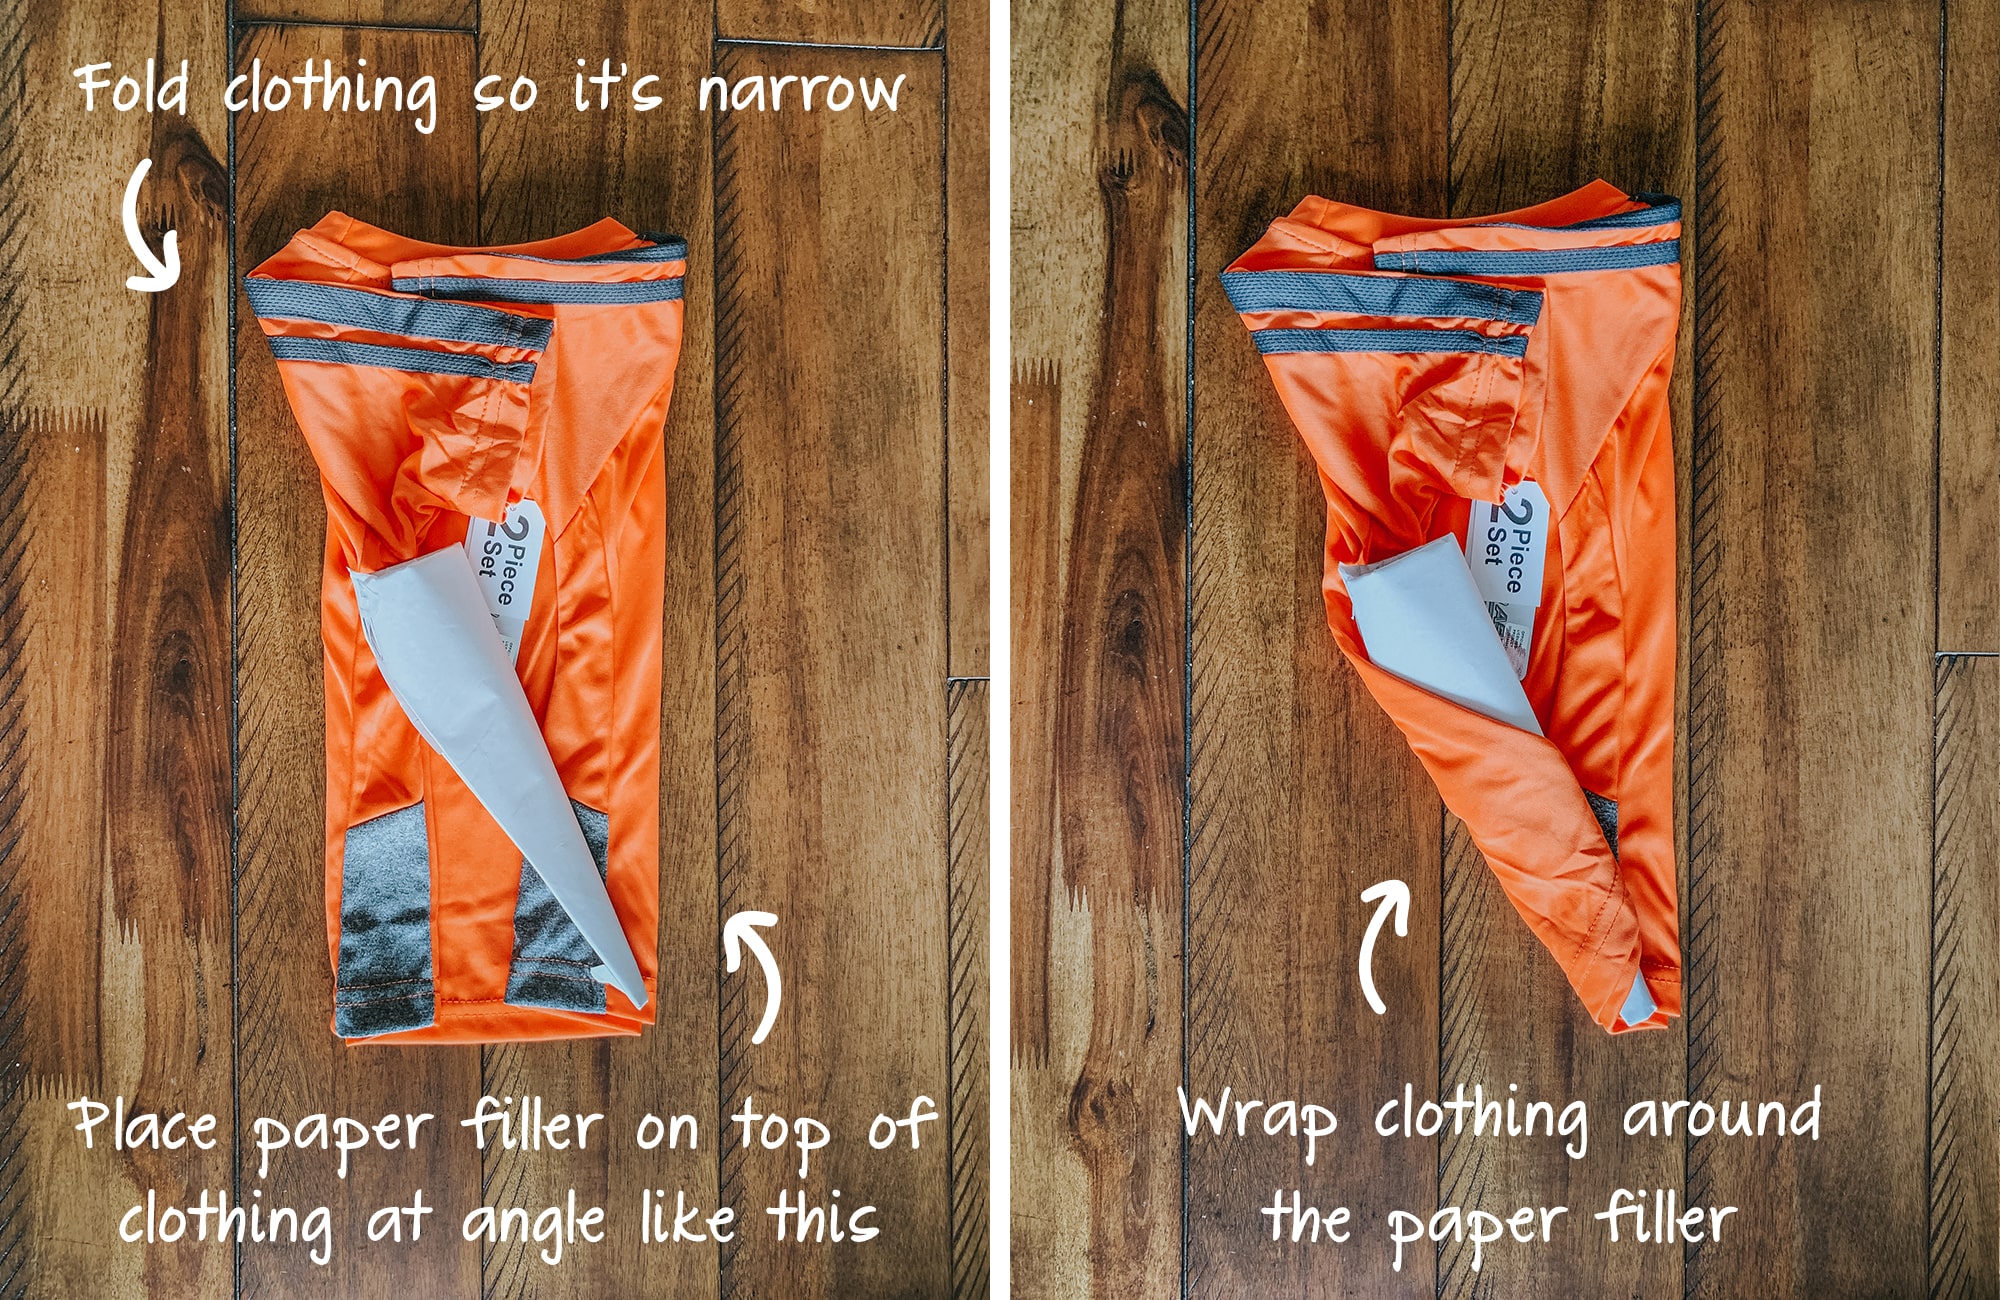 Folding clothing around paper filler